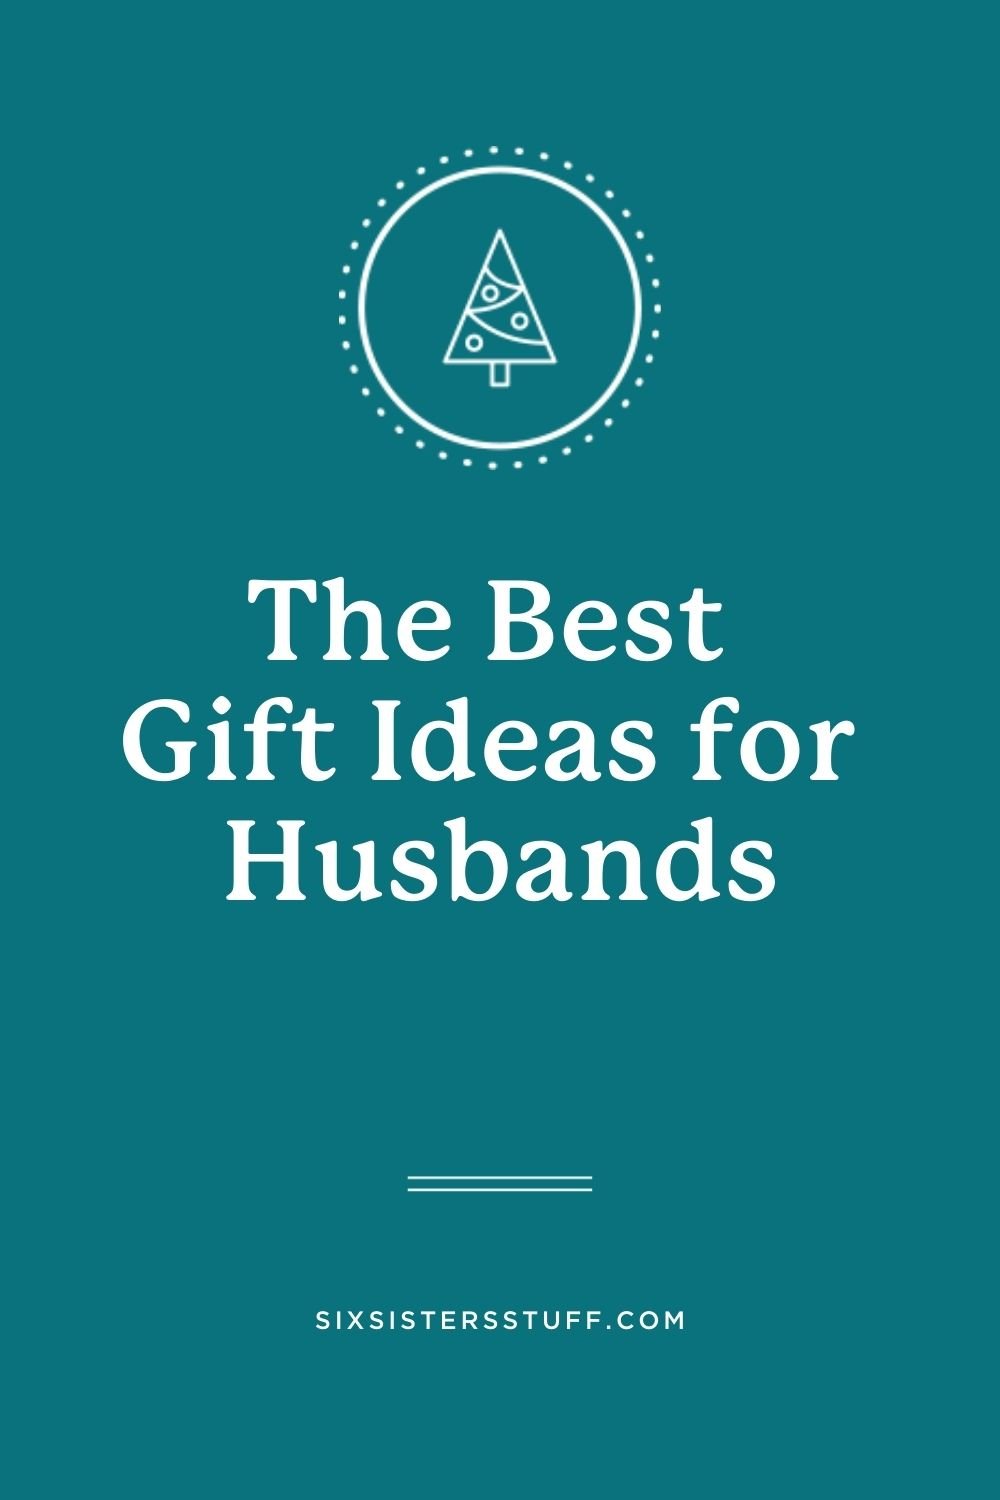 MEN'S GIFT BASKET IDEAS | HUSBAND BIRTHDAY GIFT - YouTube-cacanhphuclong.com.vn